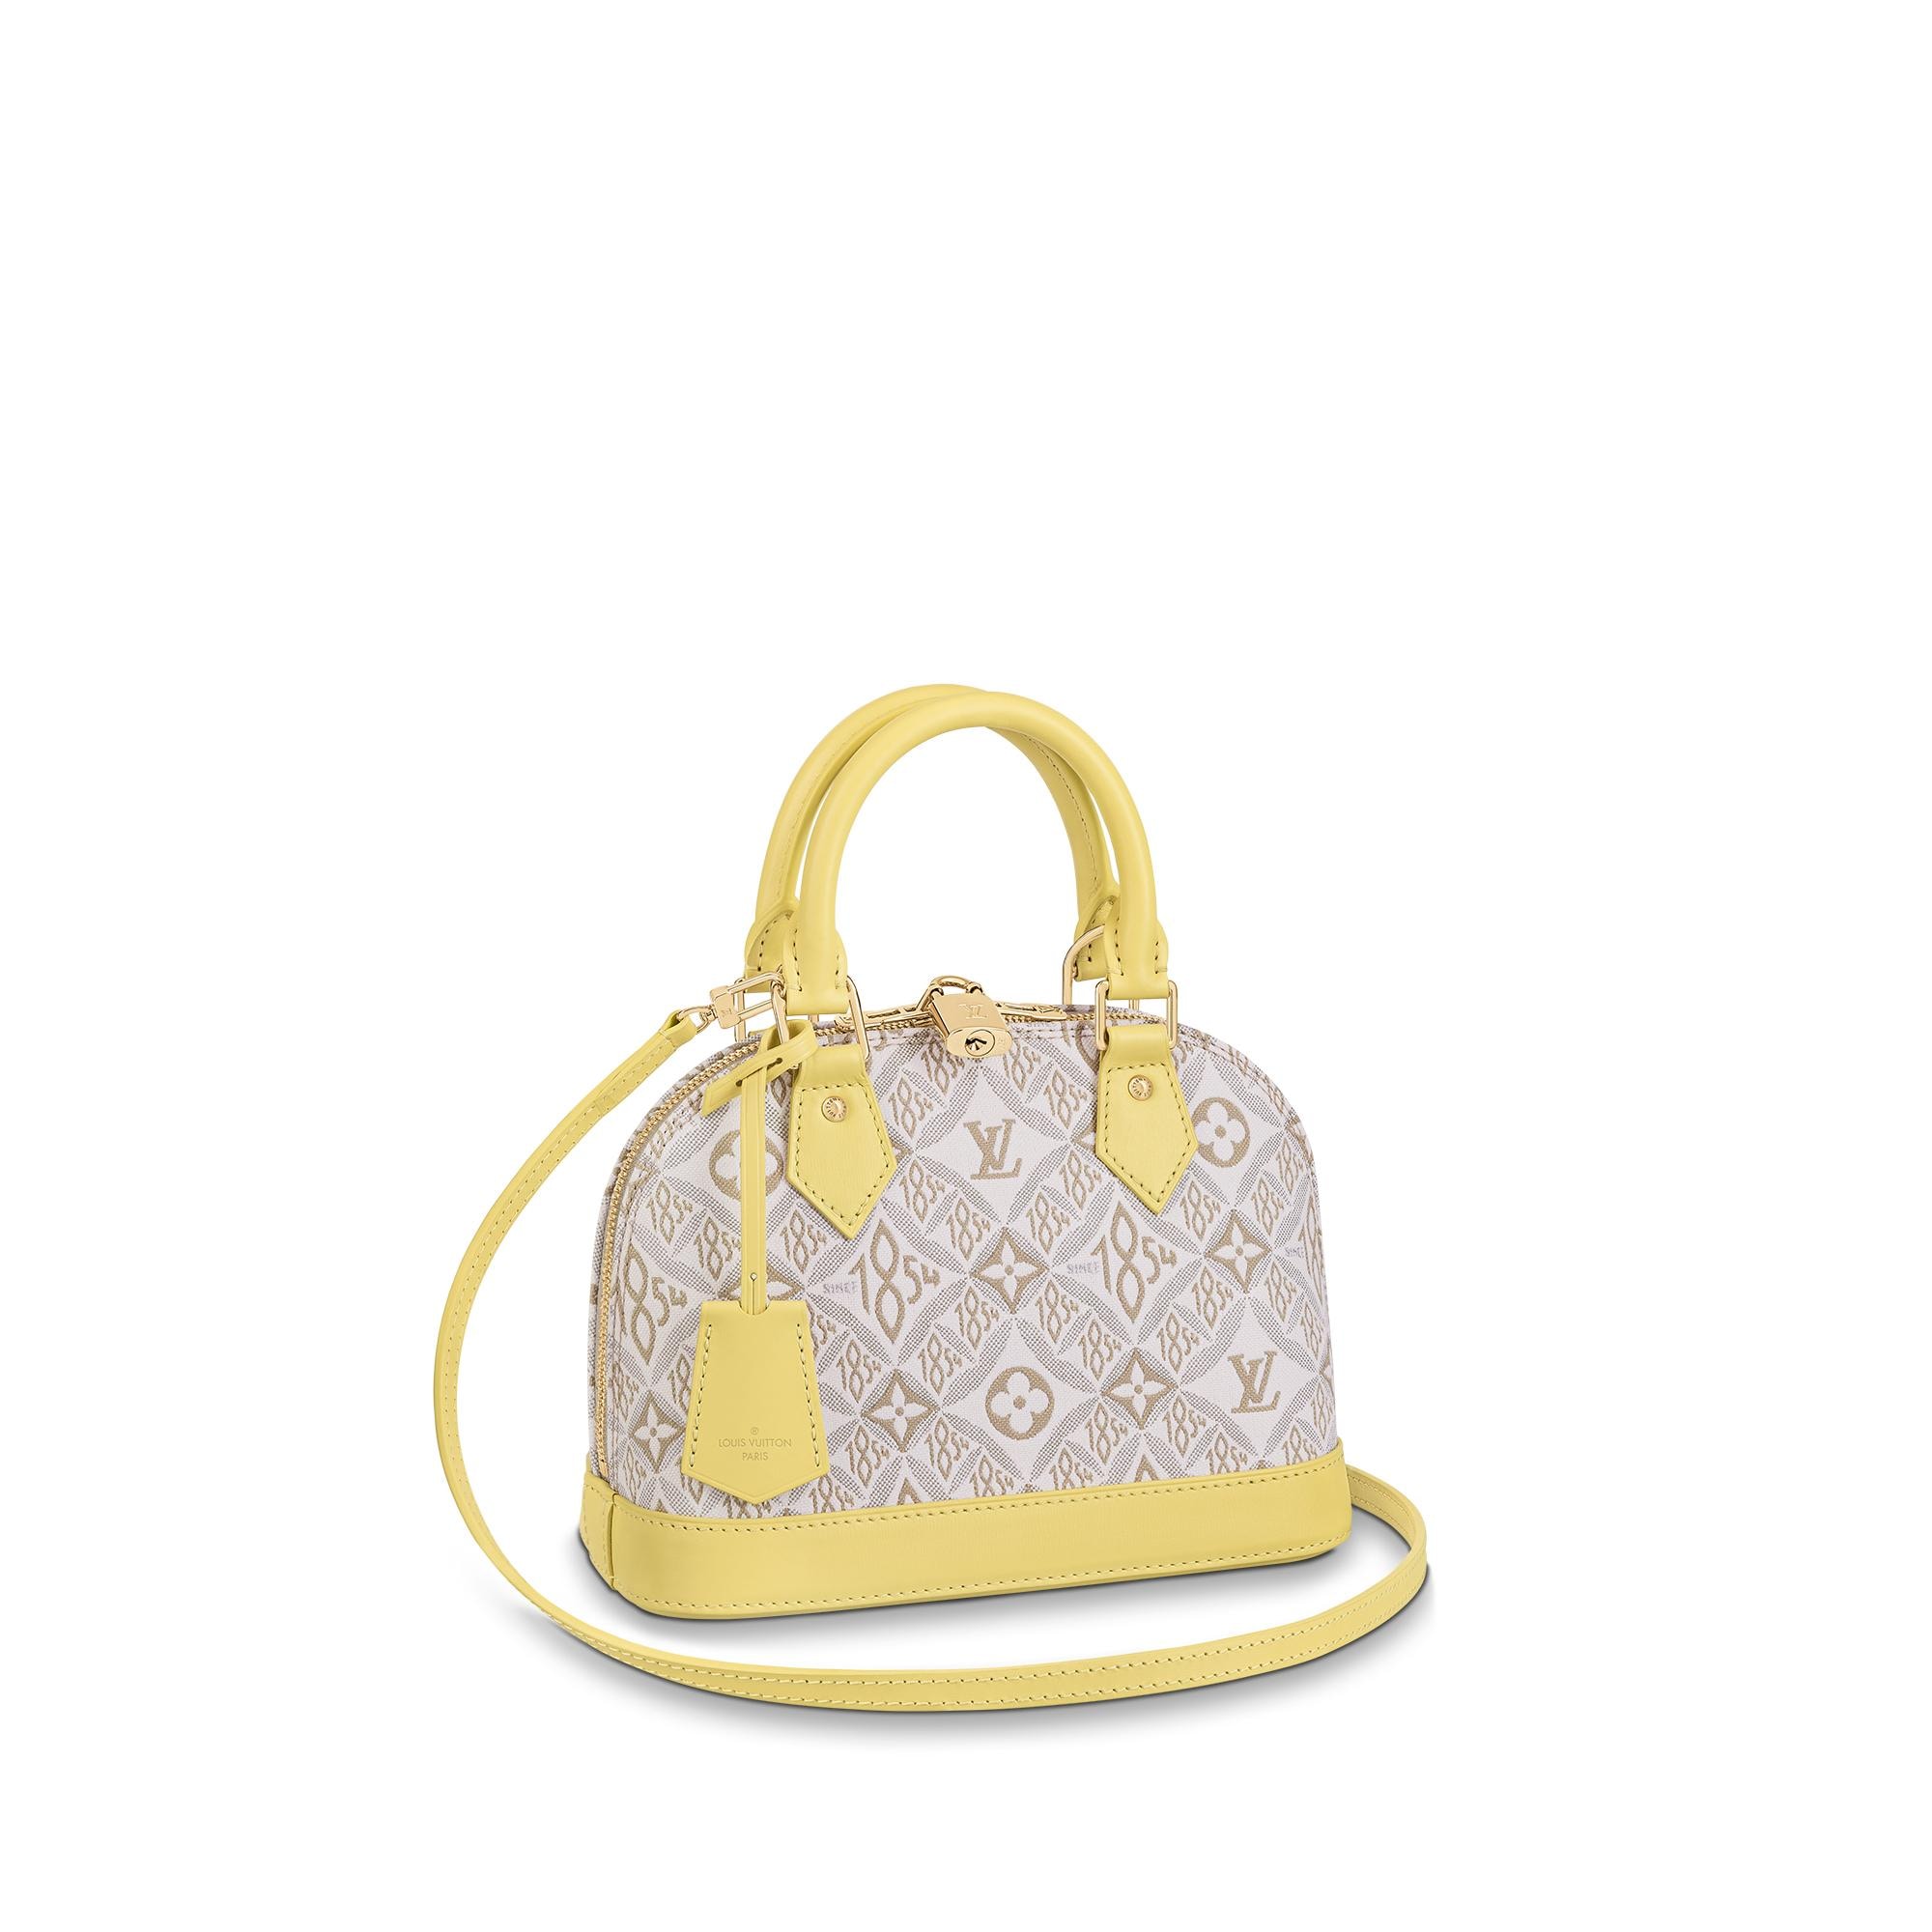 Louis Vuitton Alma BB Handbag #shopjacobjames #louisvuitton